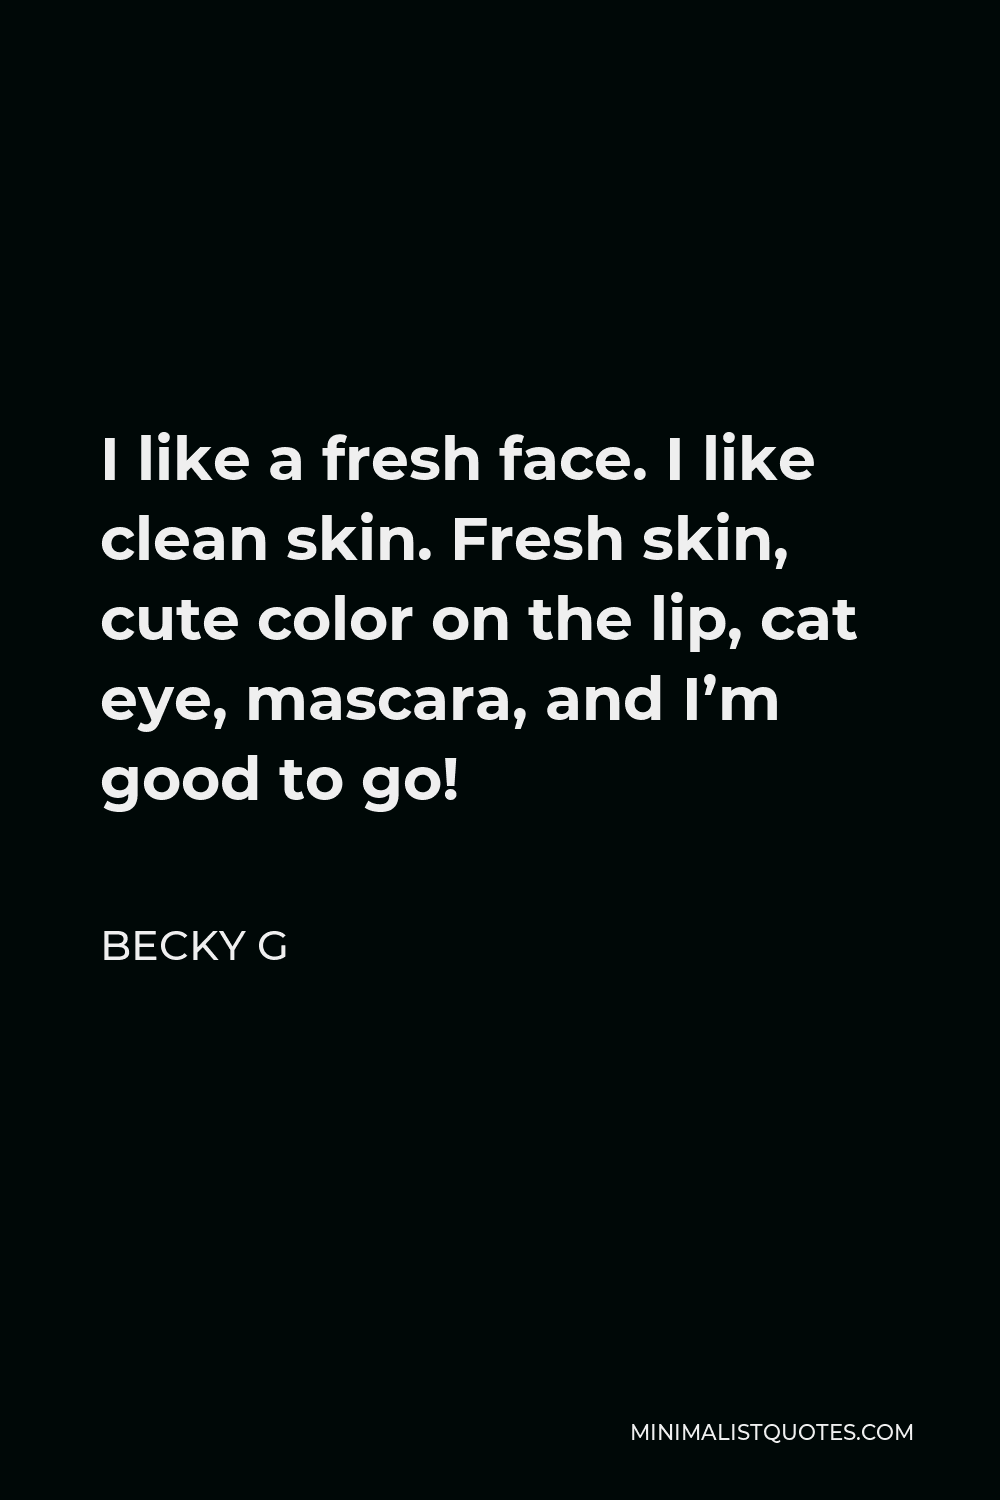 Becky G Quote - I like a fresh face. I like clean skin. Fresh skin, cute color on the lip, cat eye, mascara, and I’m good to go!